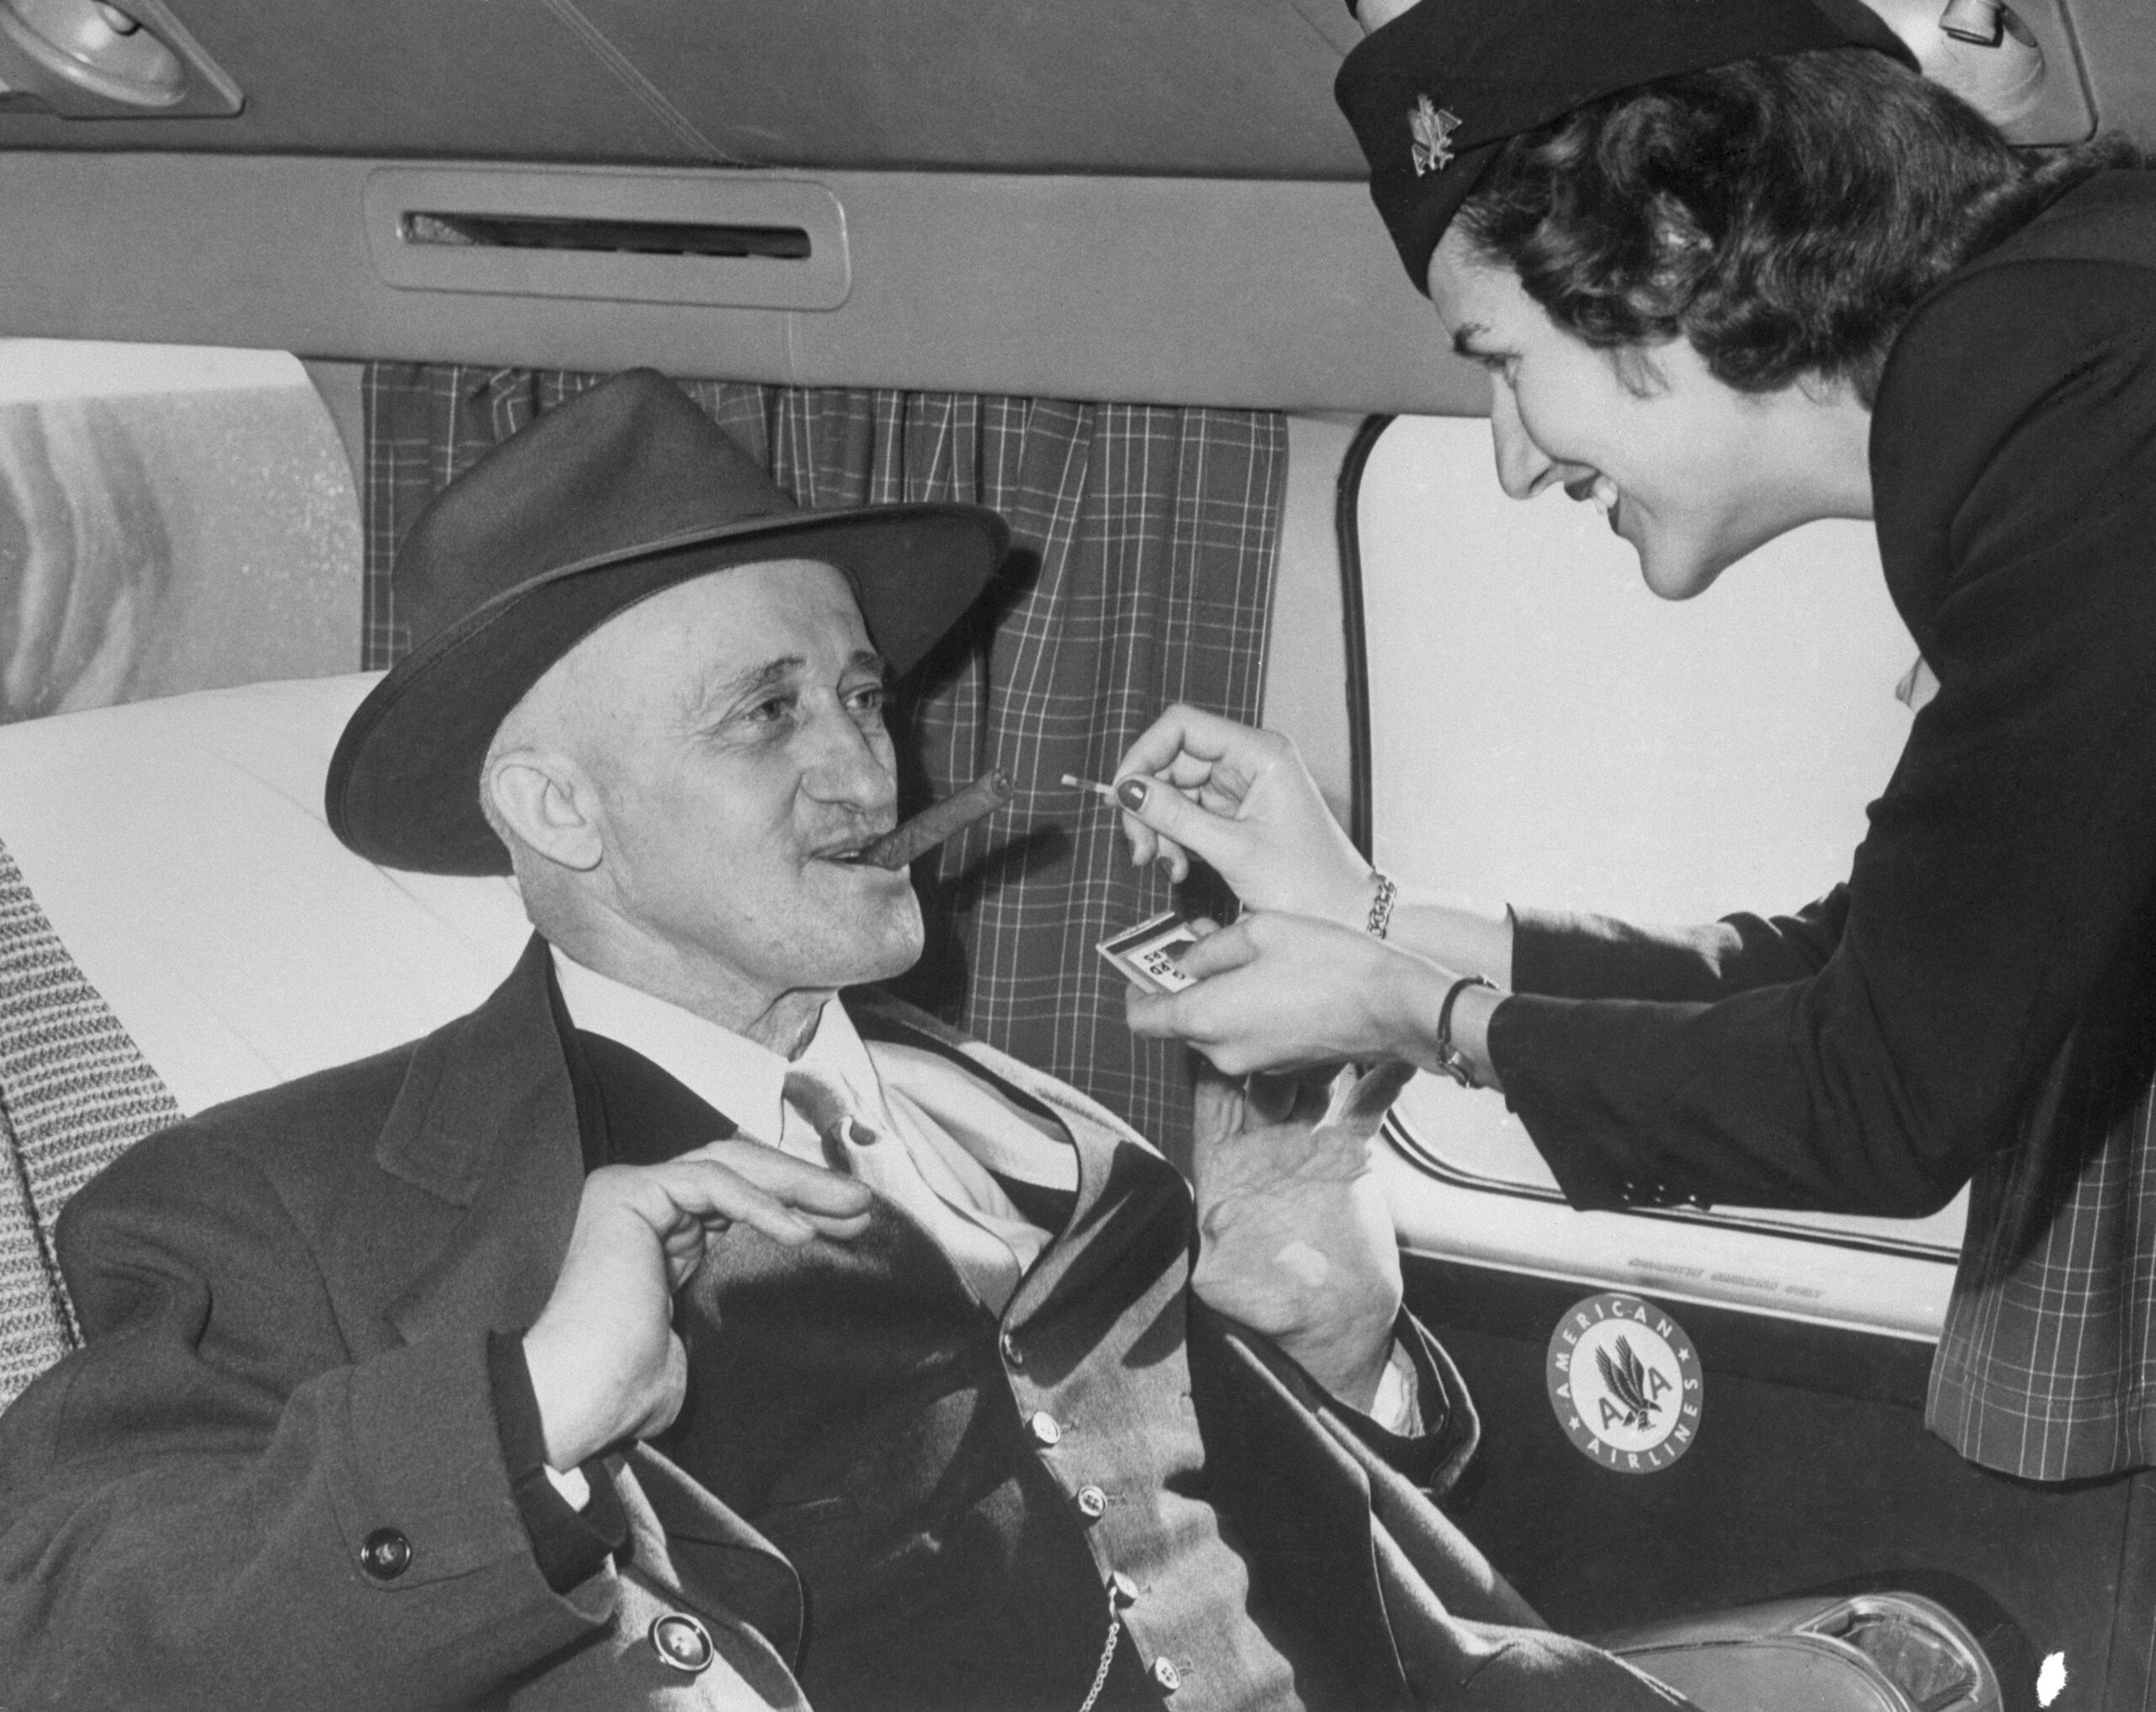 A flight attendant lights a man's cigar on a plane in 1949